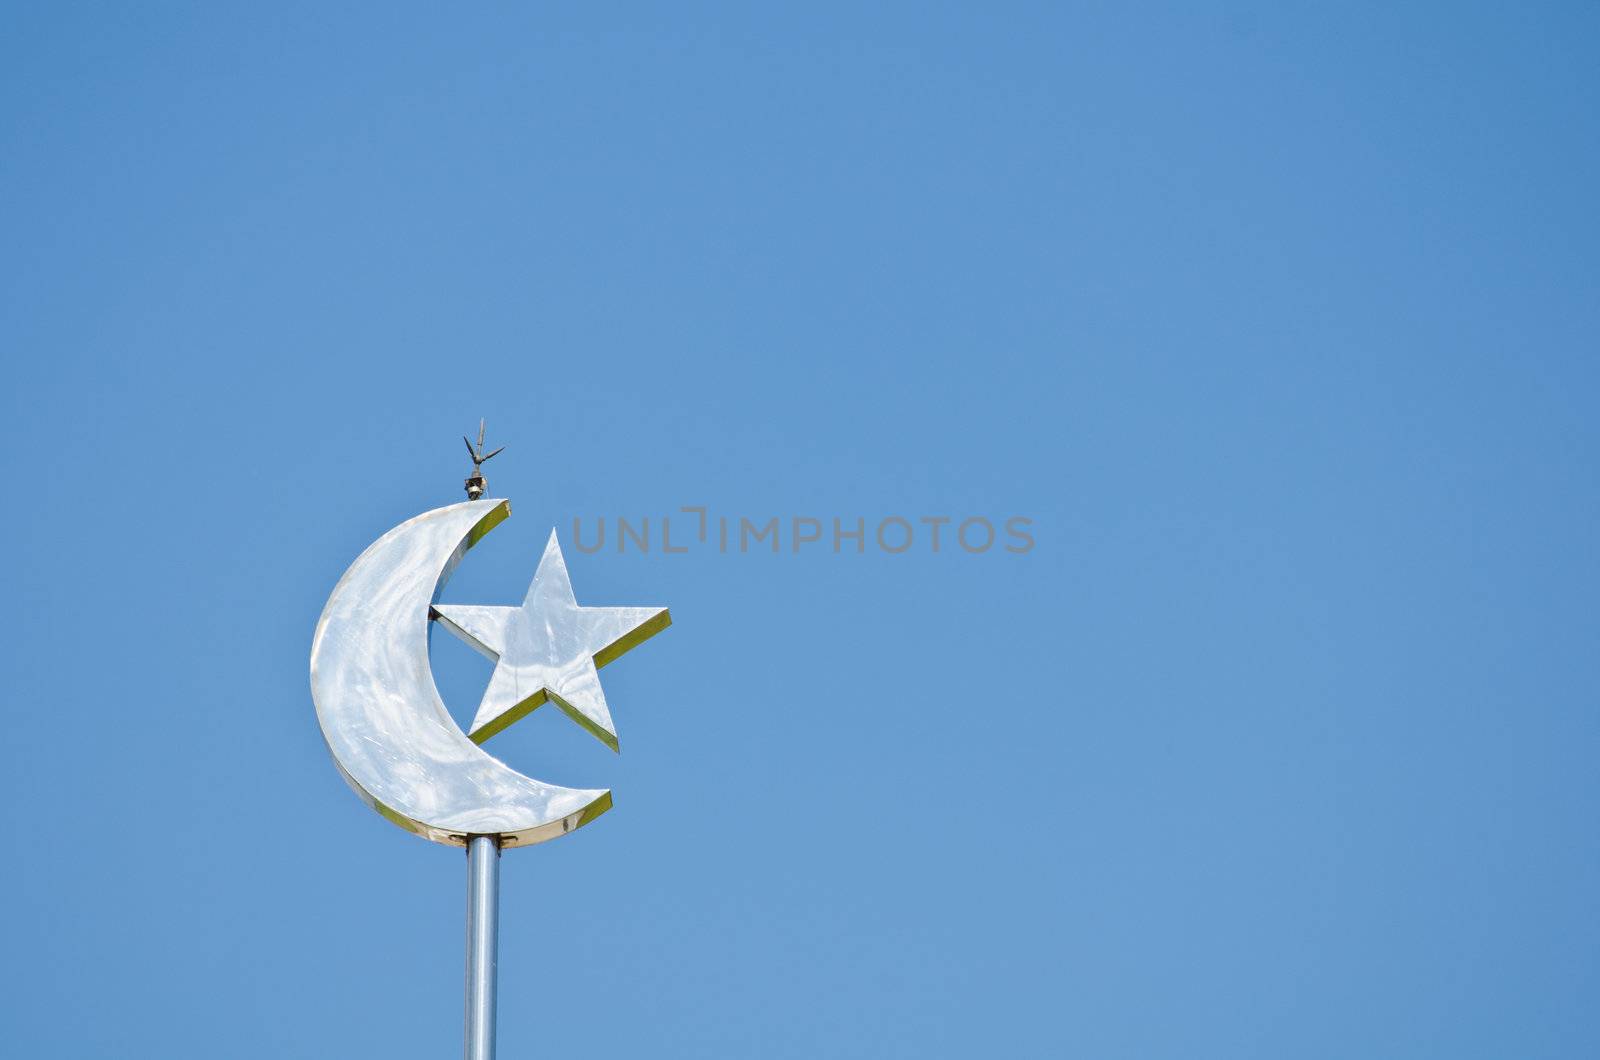 Moon and star symbol of Islam.